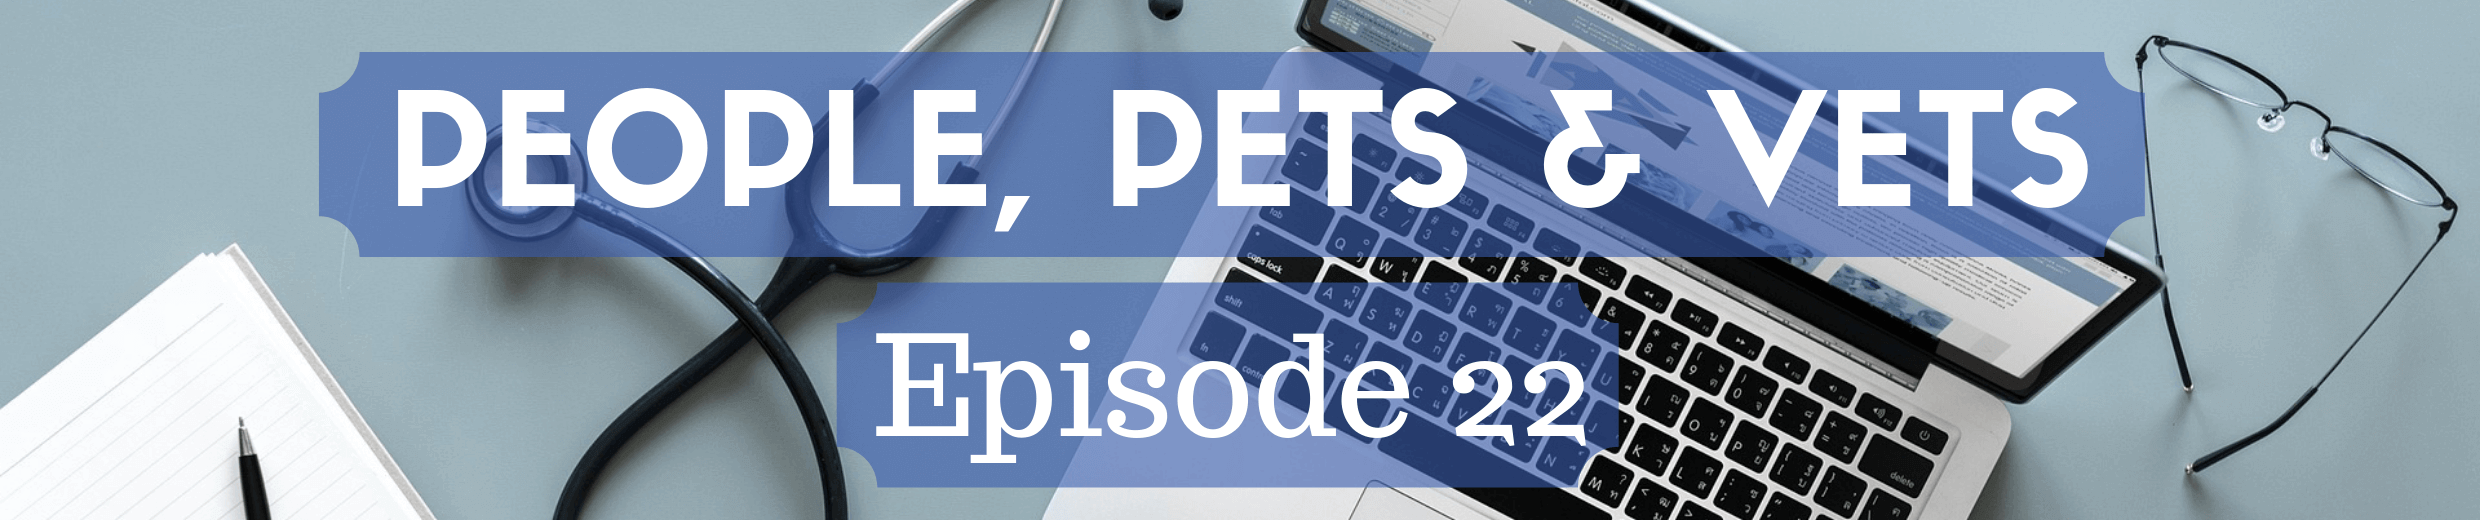 People, Pets & Vets: Episode 22